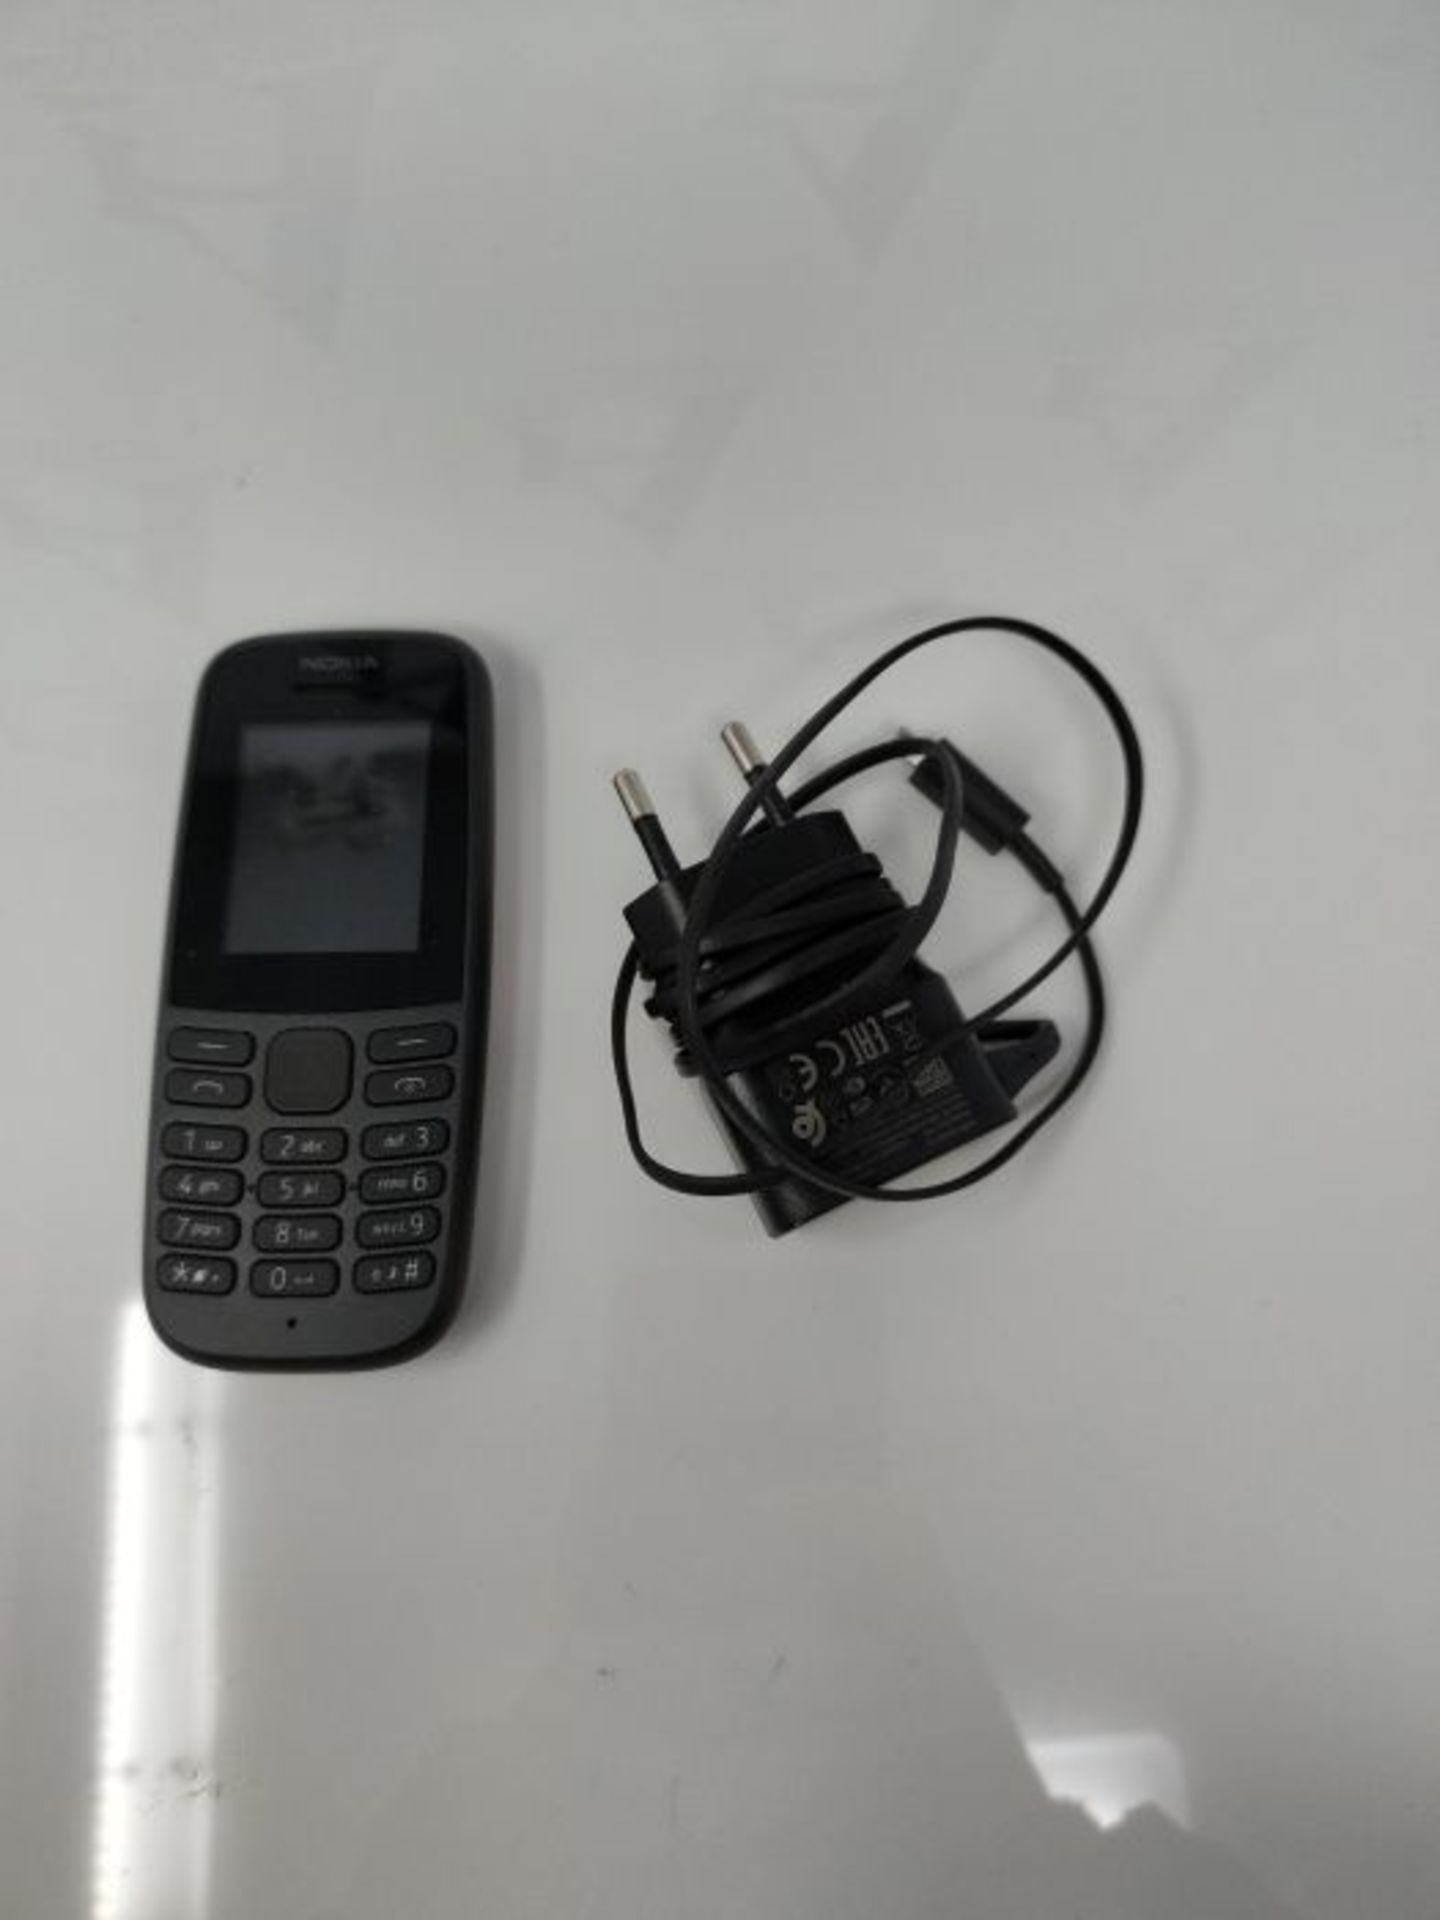 Nokia 105 Mobiltelefon (1, 8 Zoll Farbdisplay, FM Radio, 4 MB ROM, Dual-Sim) Schwarz, - Image 3 of 3